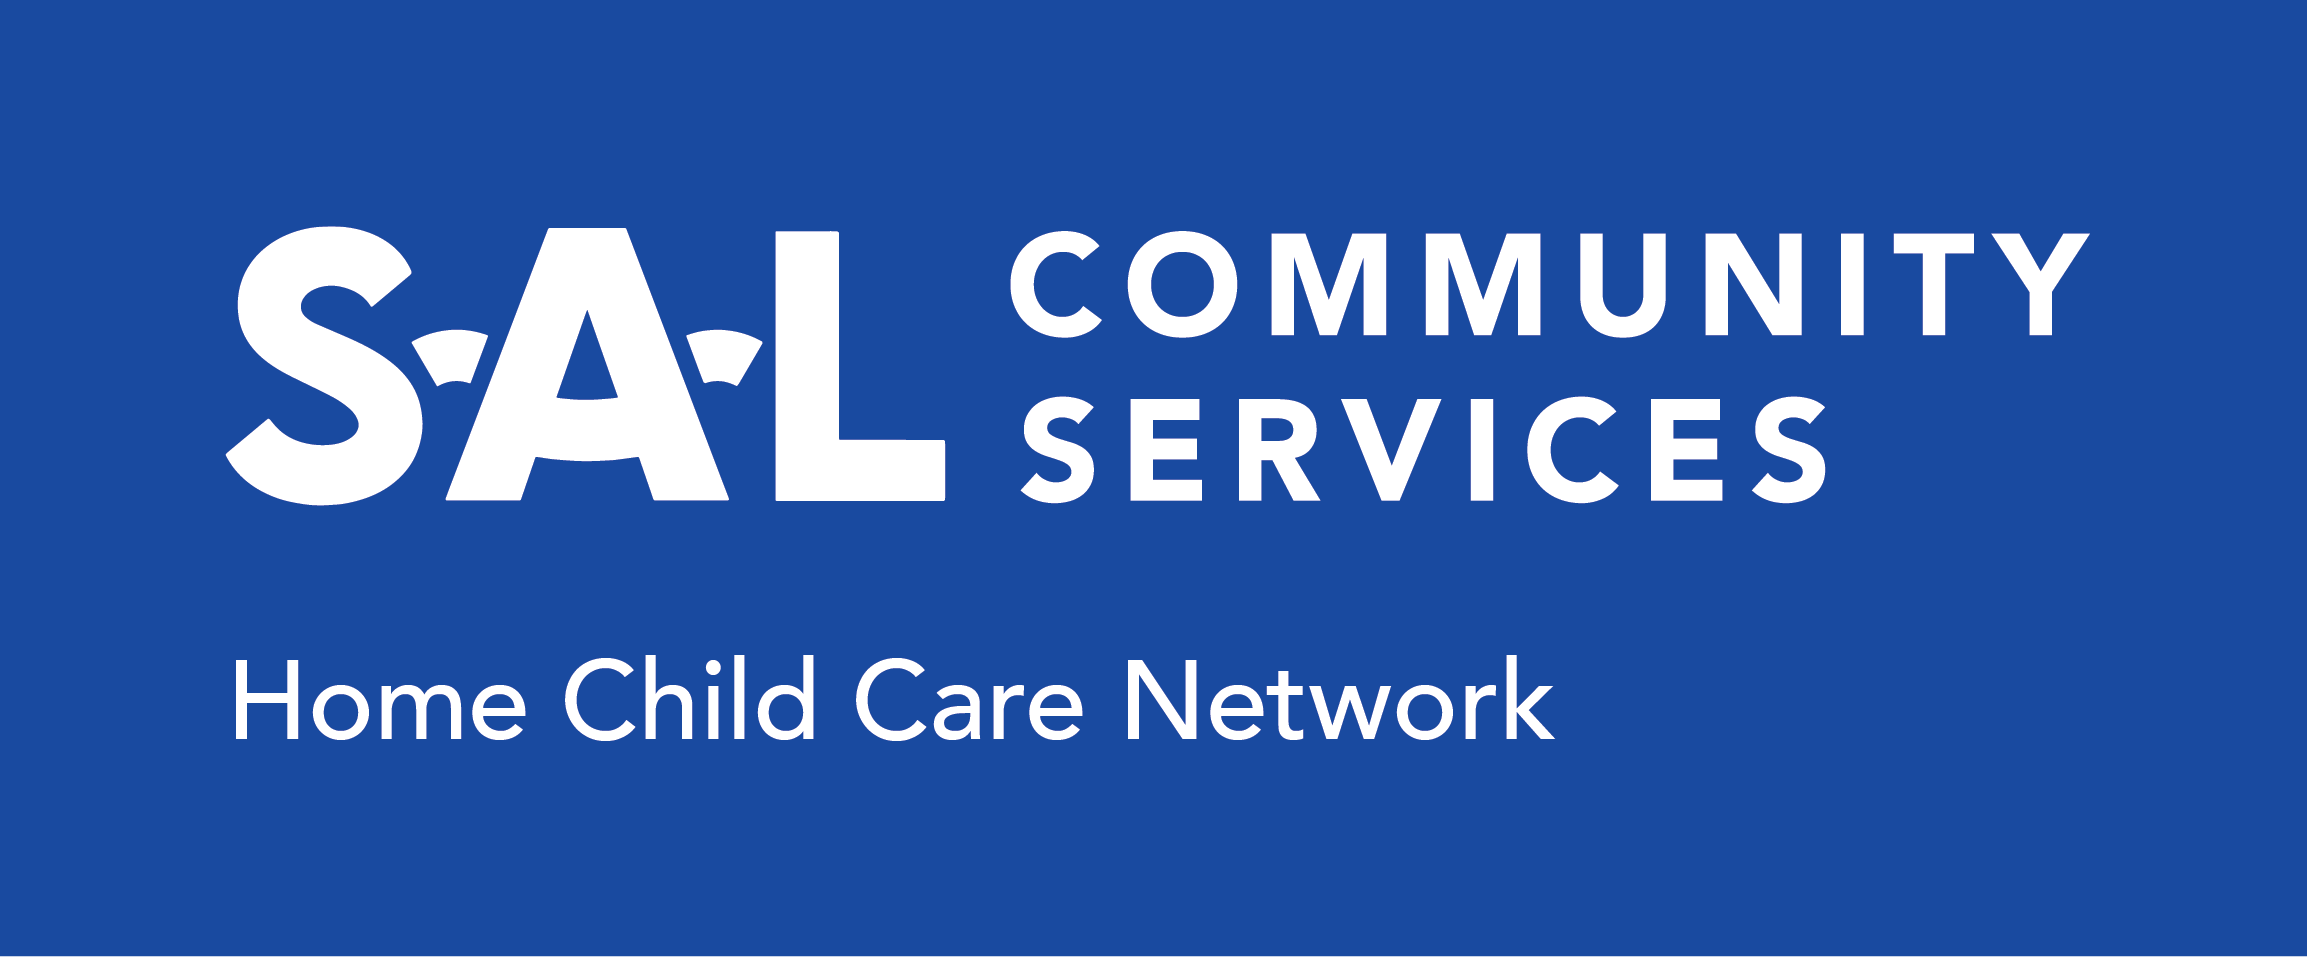 Home Child Care Network